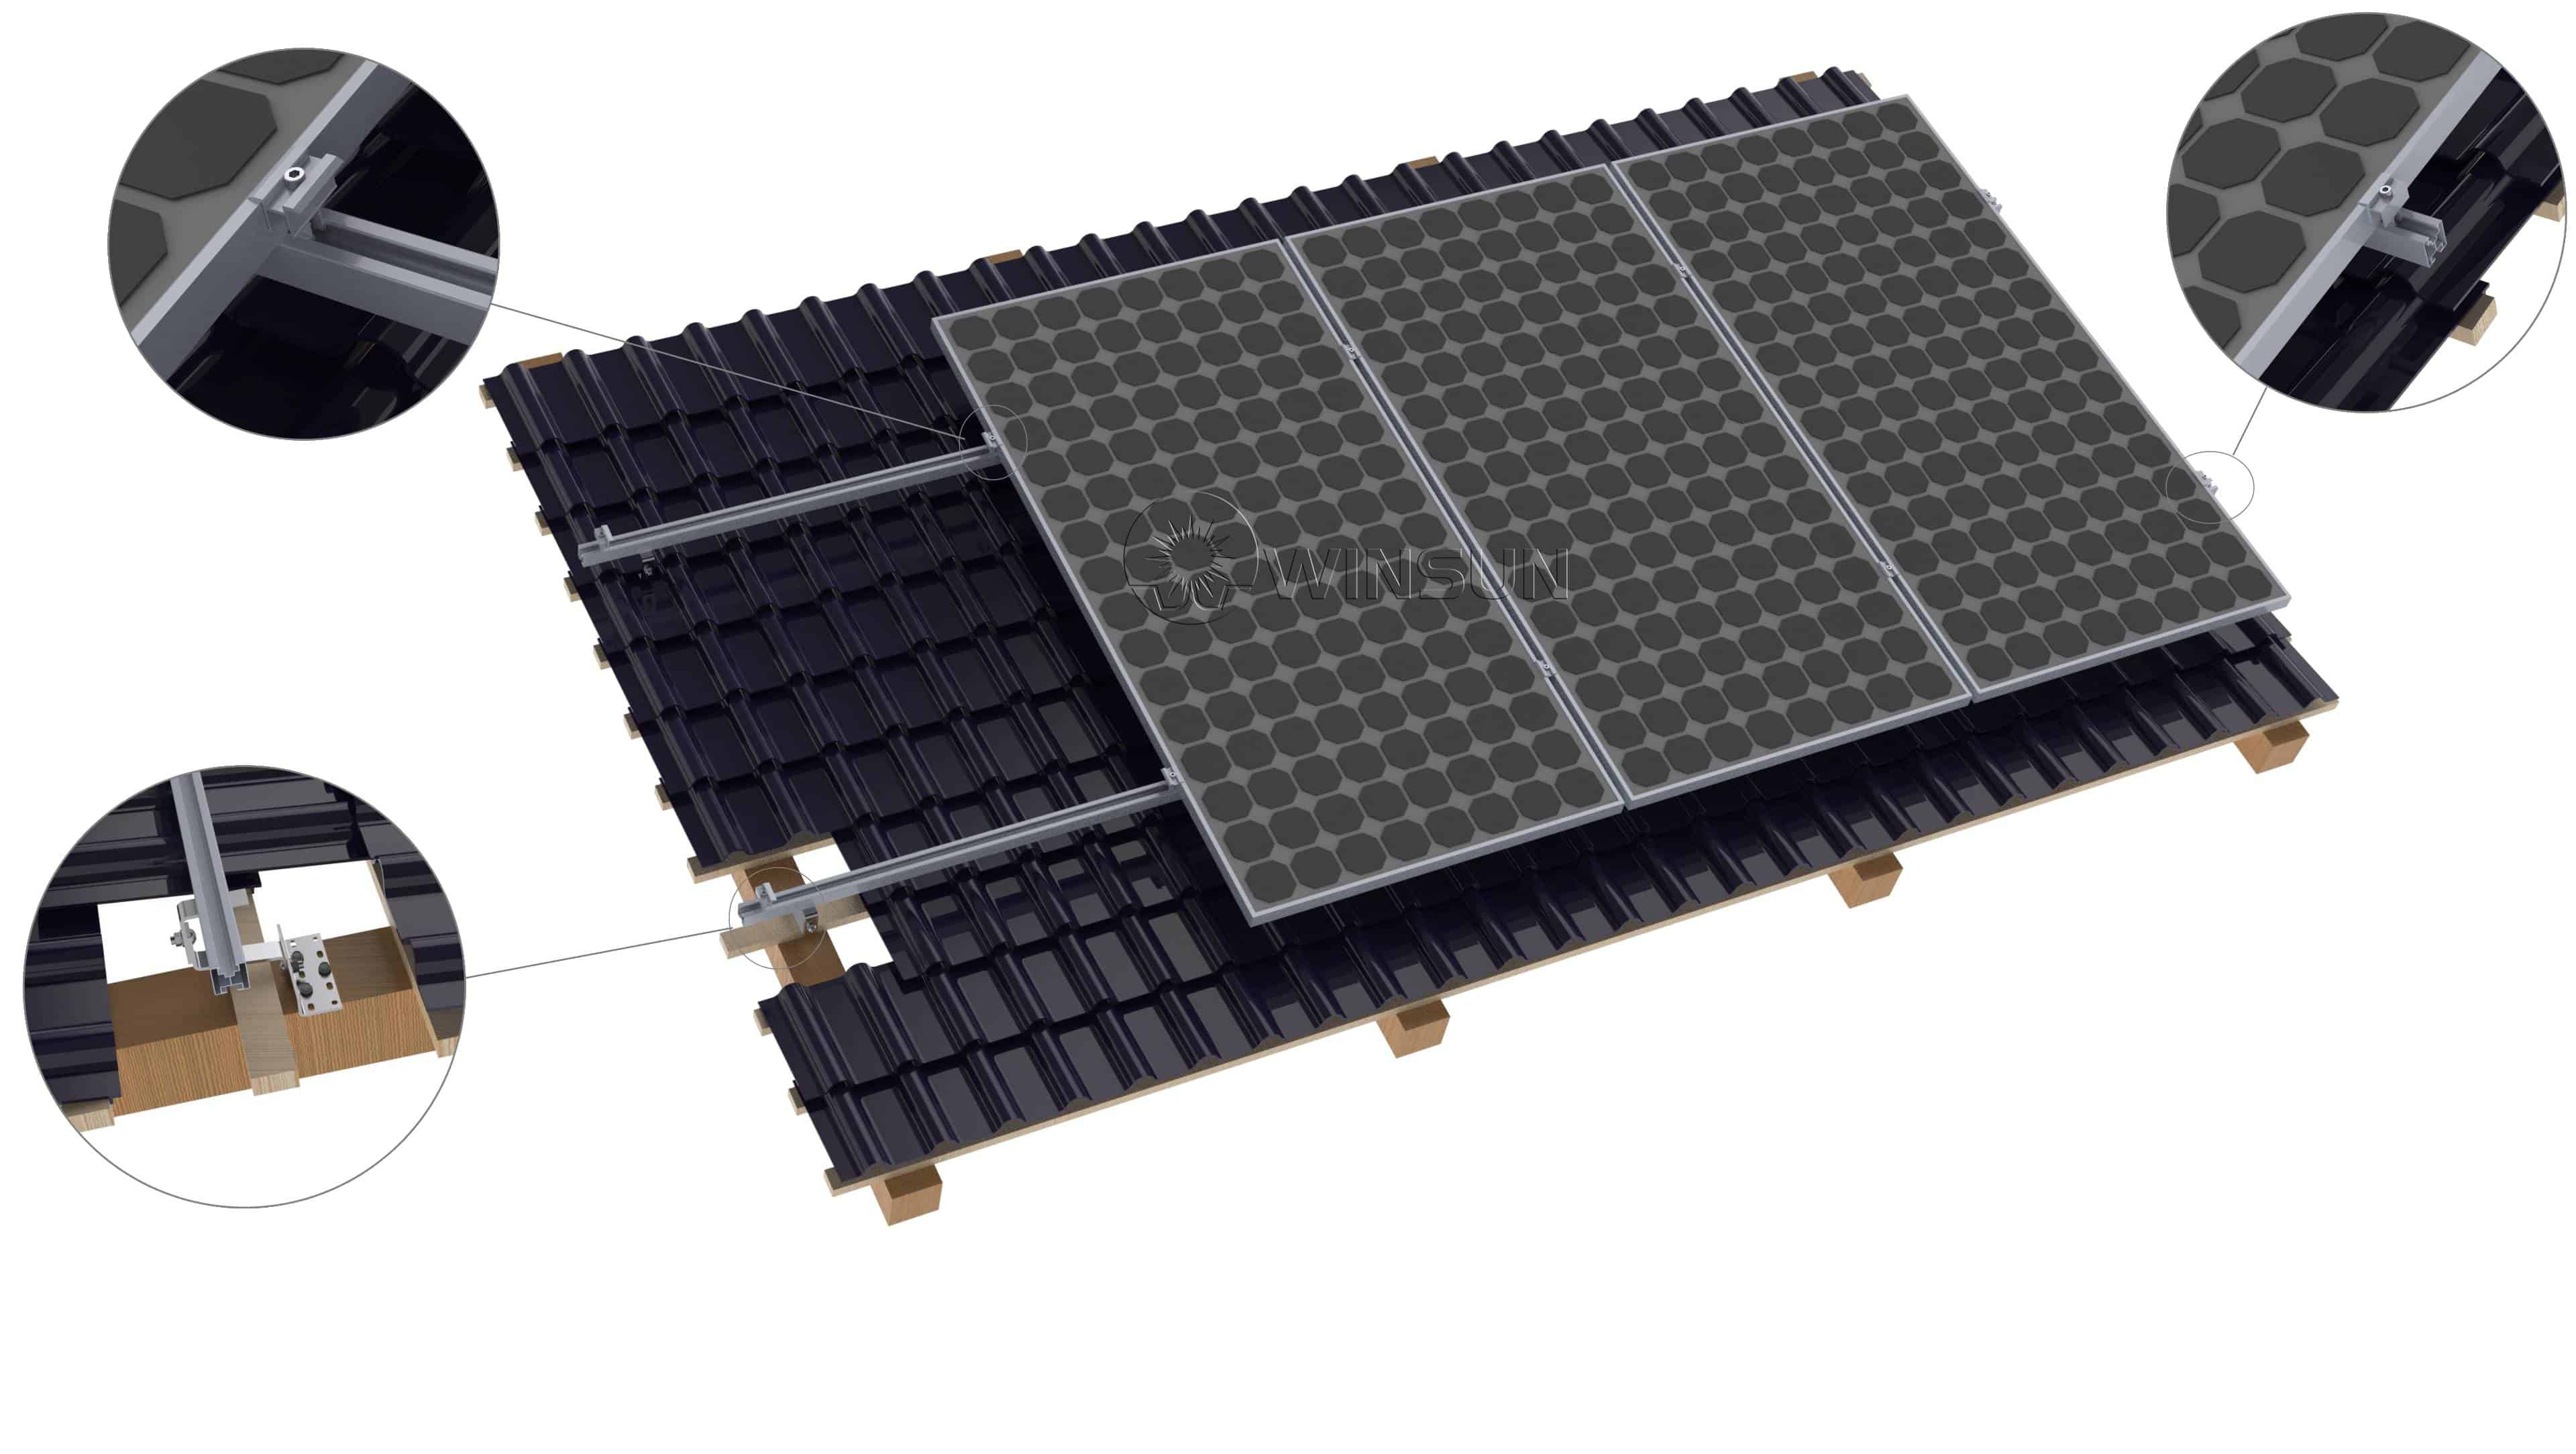 winsun adjustable tile roof hook solar mounting system